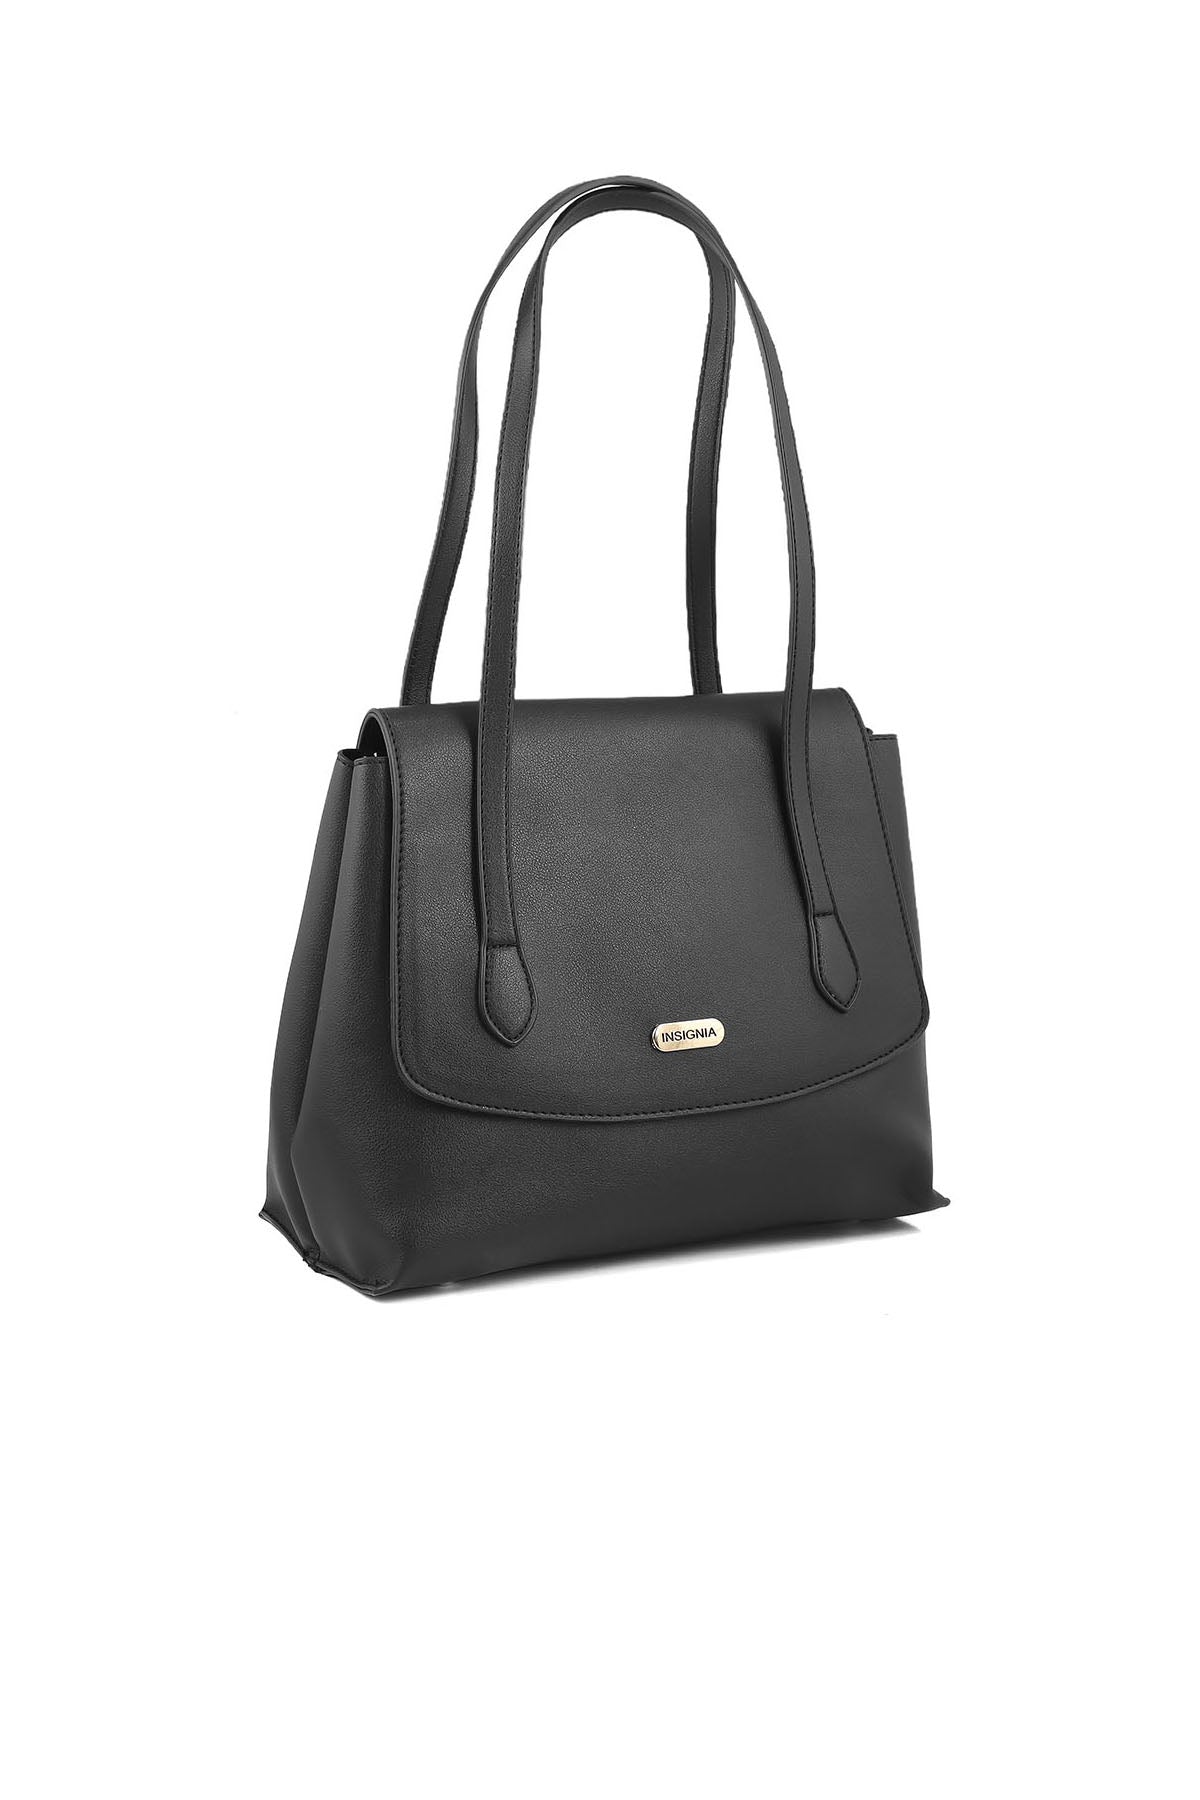 Flap Shoulder Bags B15043-Black